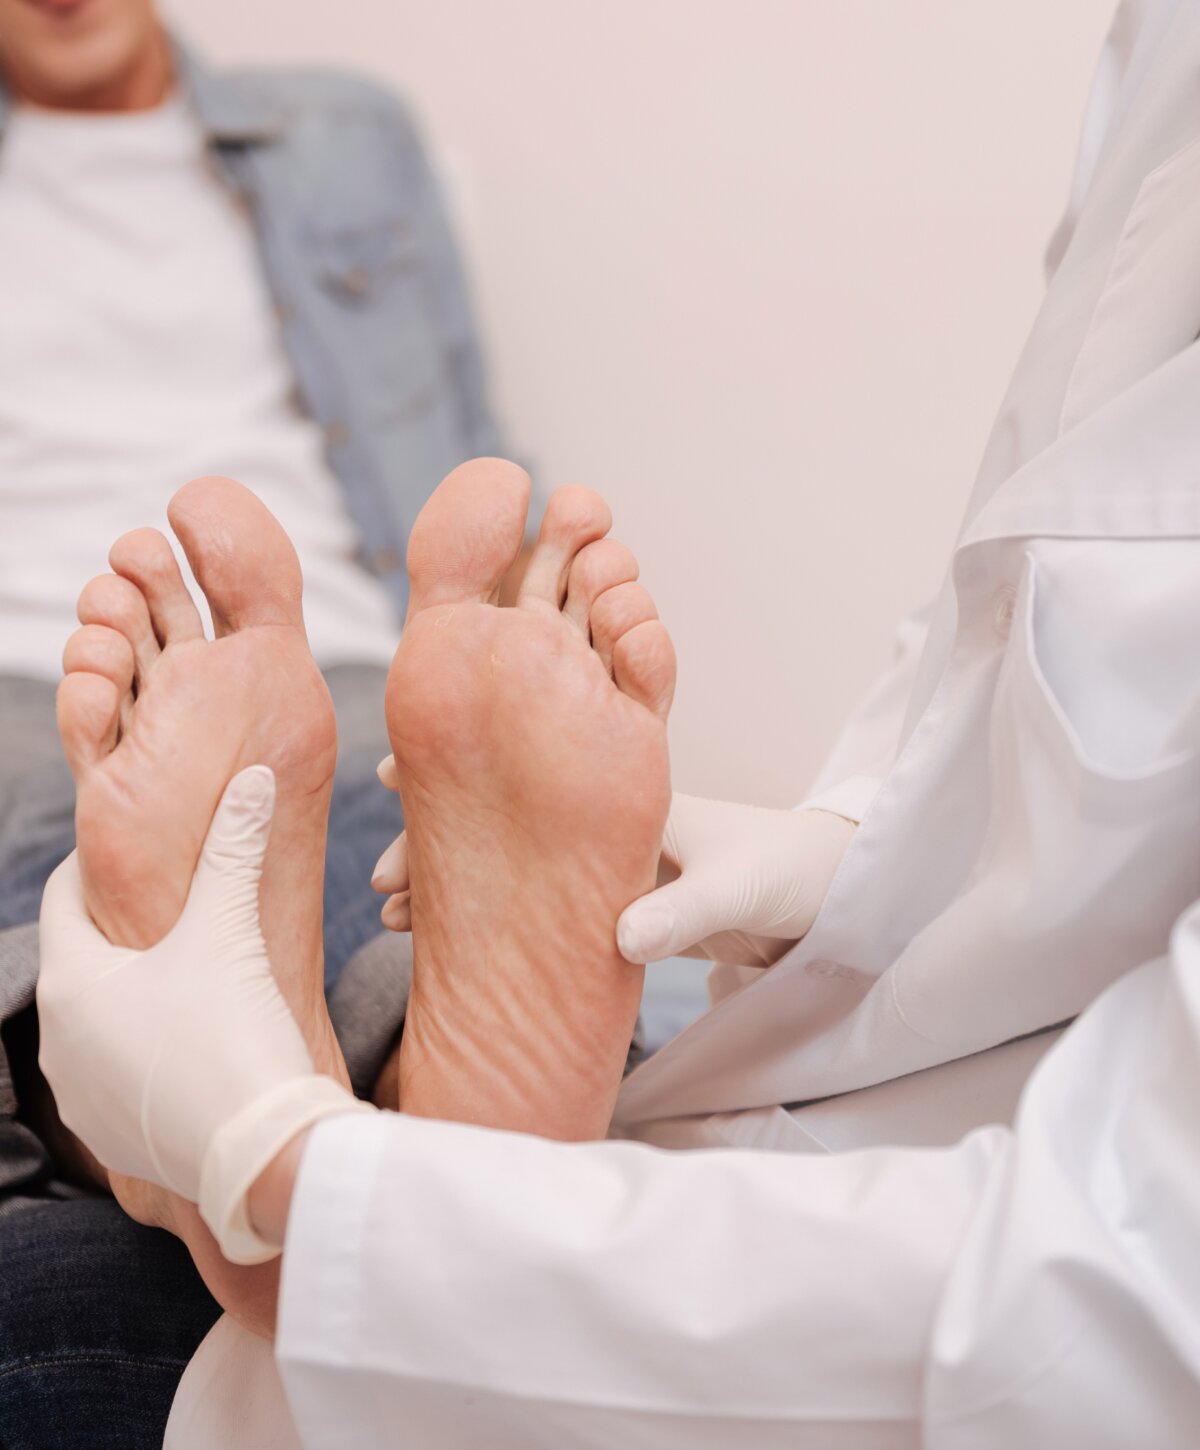 Ann Arbor fracture foot care model receiving treatment